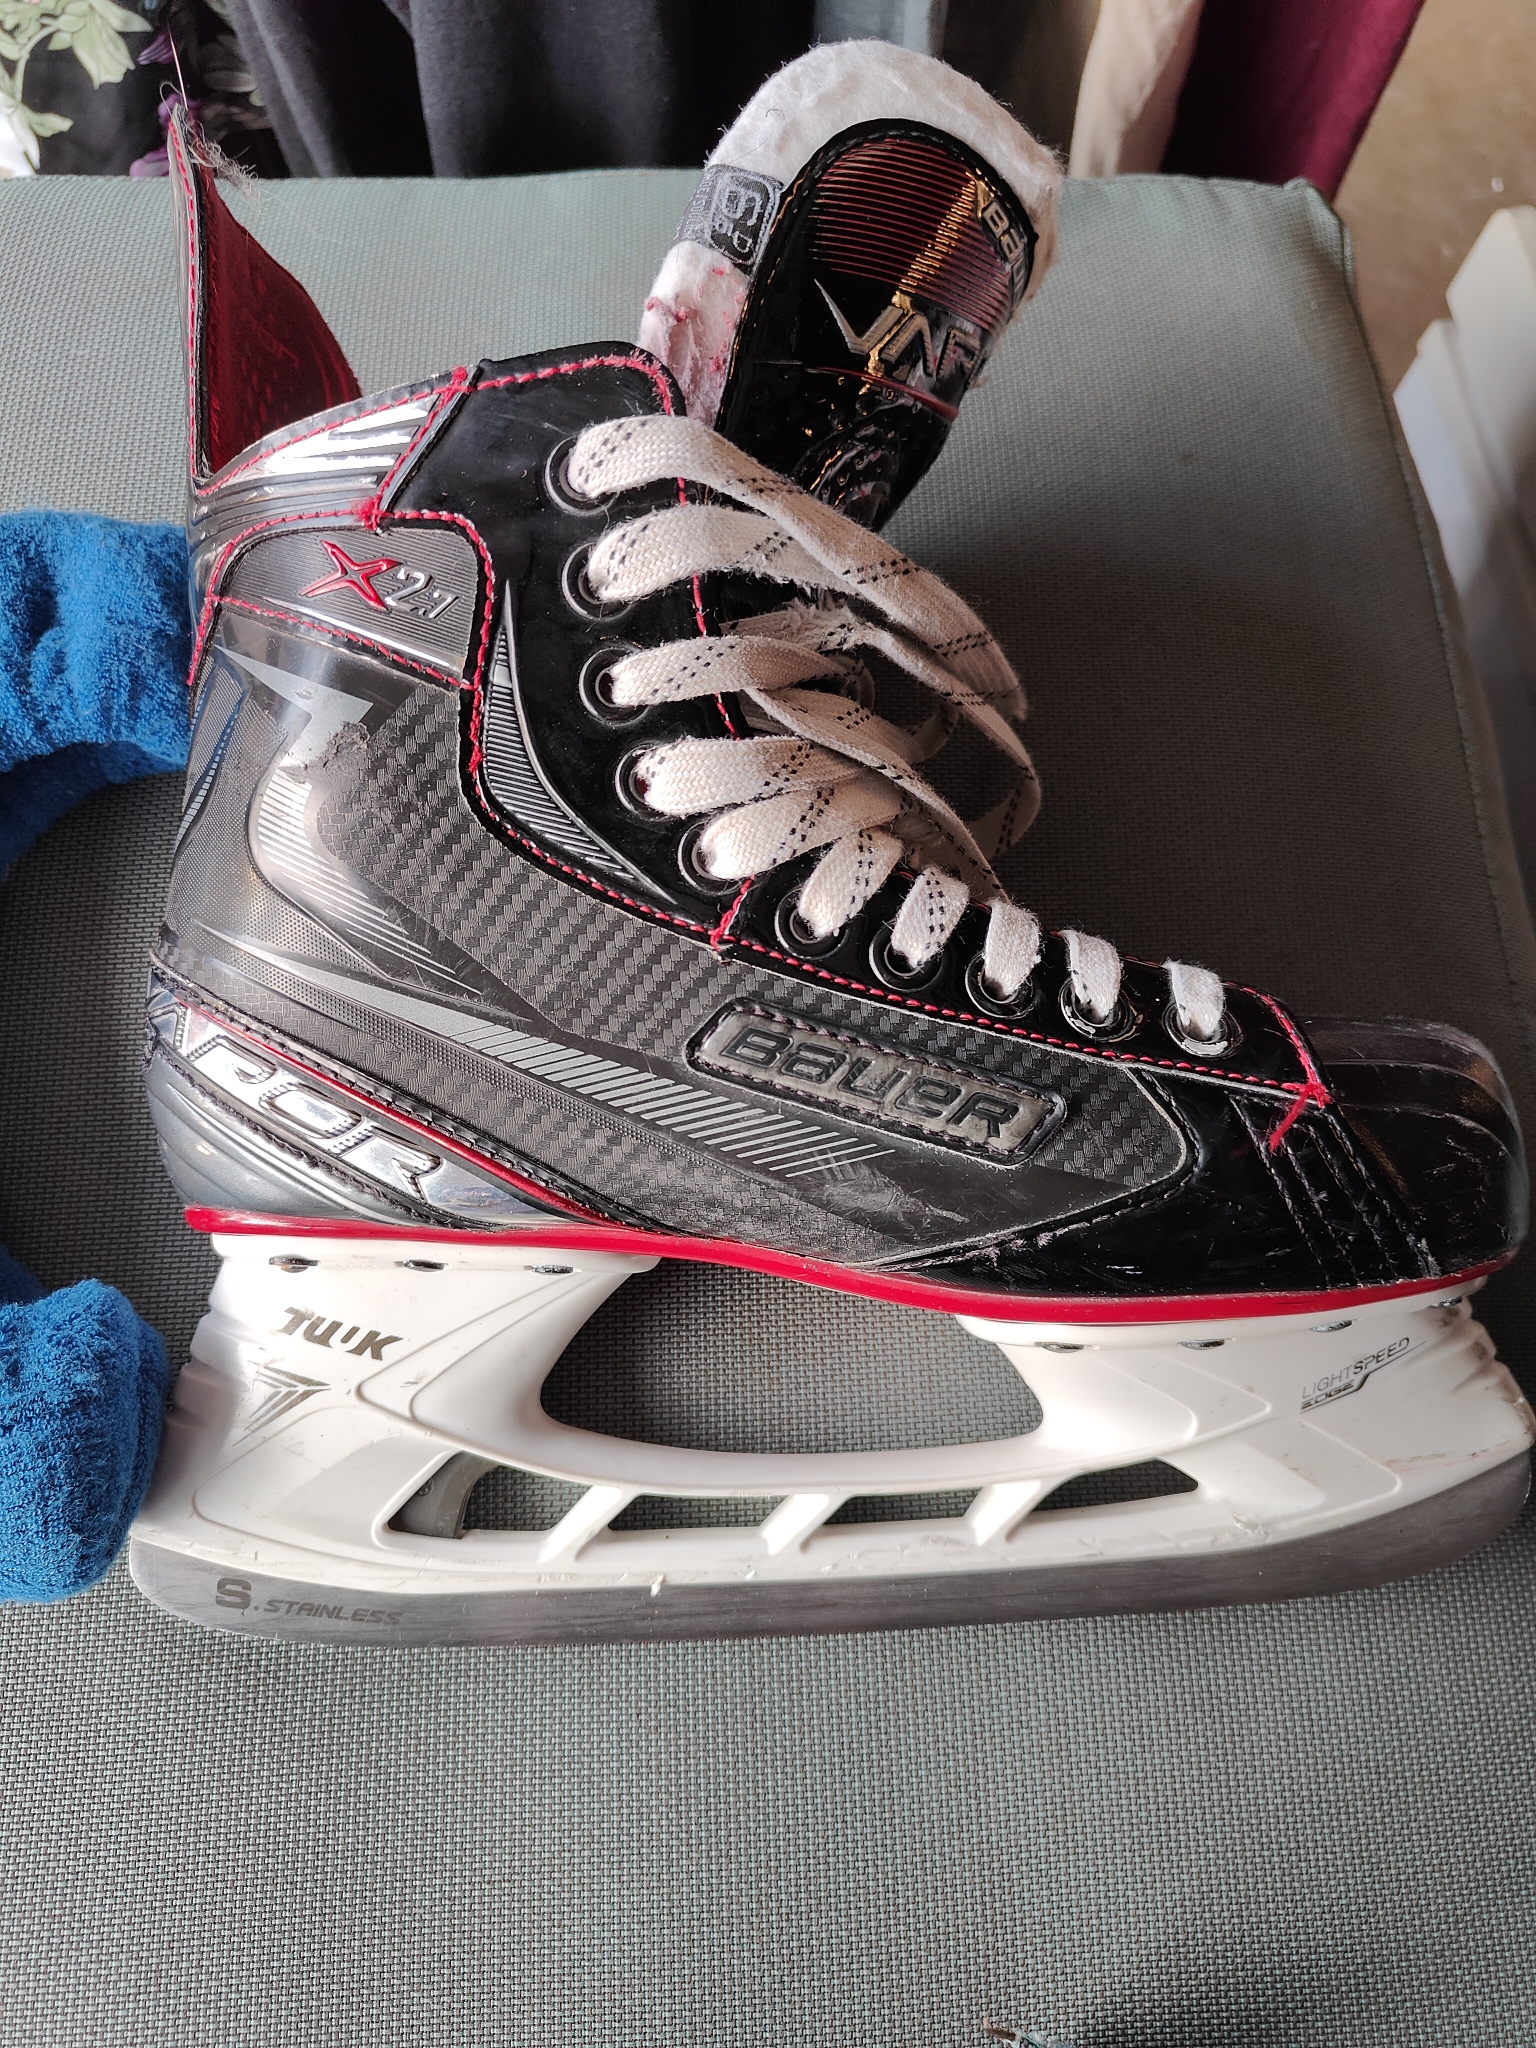 Used Senior Bauer Vapor Hockey Skates Regular Width Size 6.5